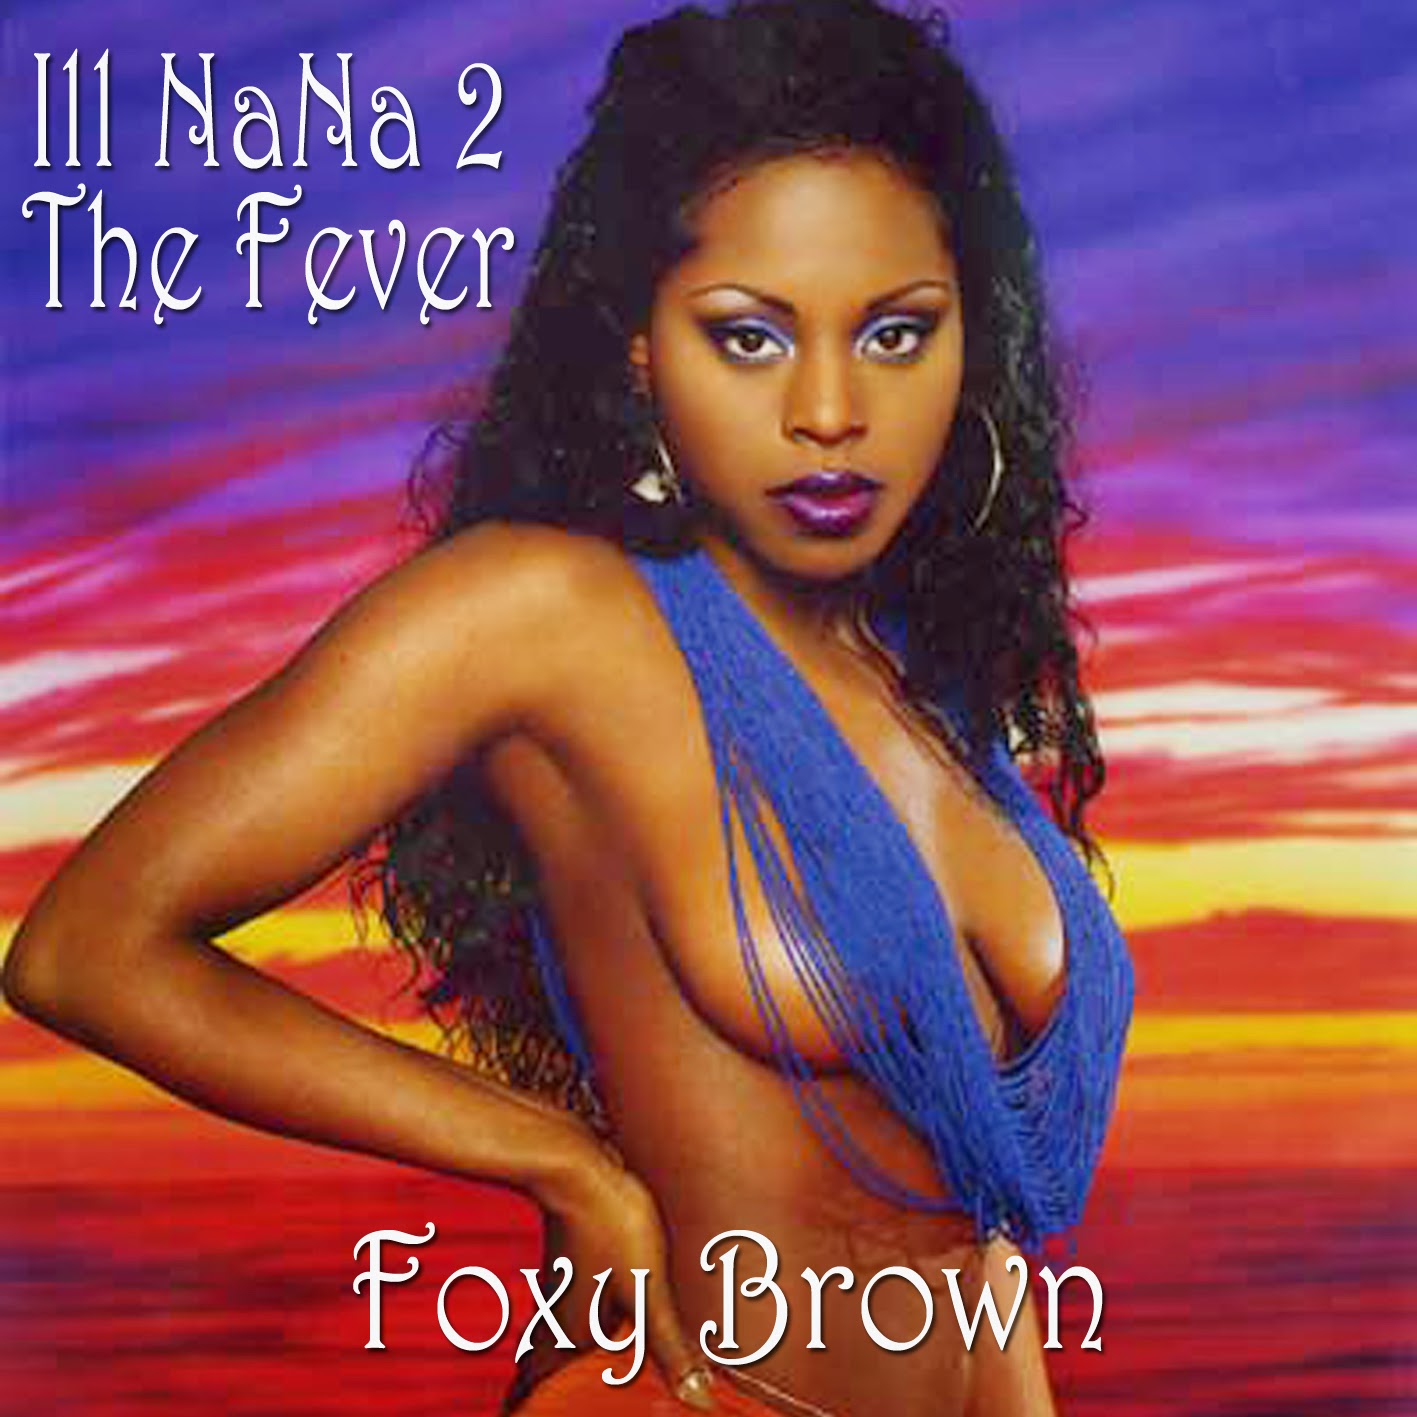 foxy brown ill na na 2 the fever rar download